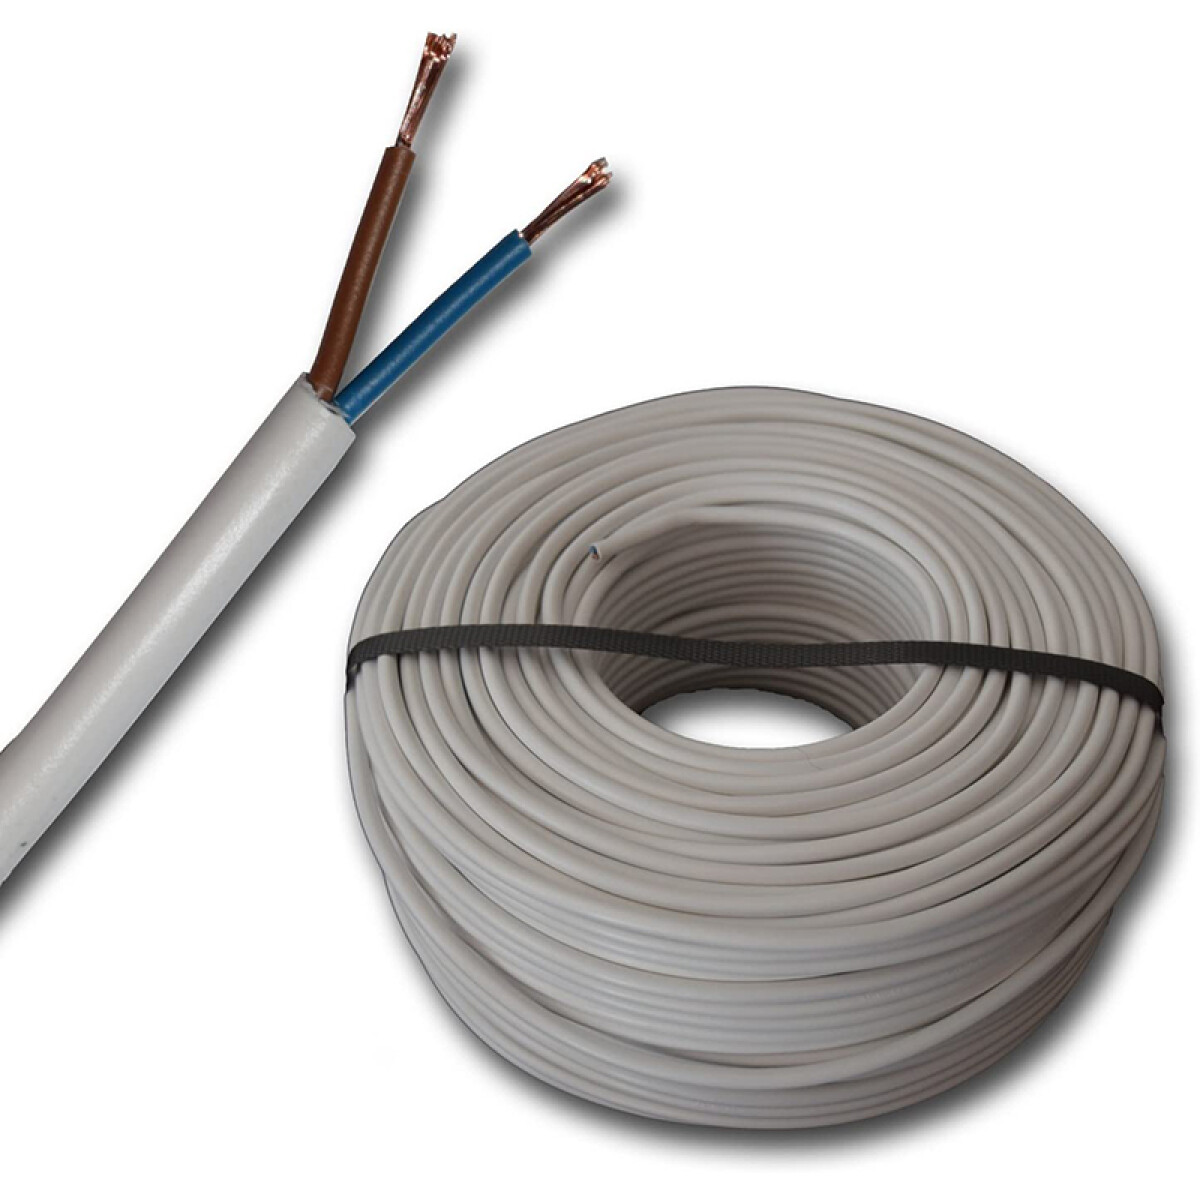 Cable bajo plástico gris 2x2,5mm² - Rollo 100 mts. - N04306 